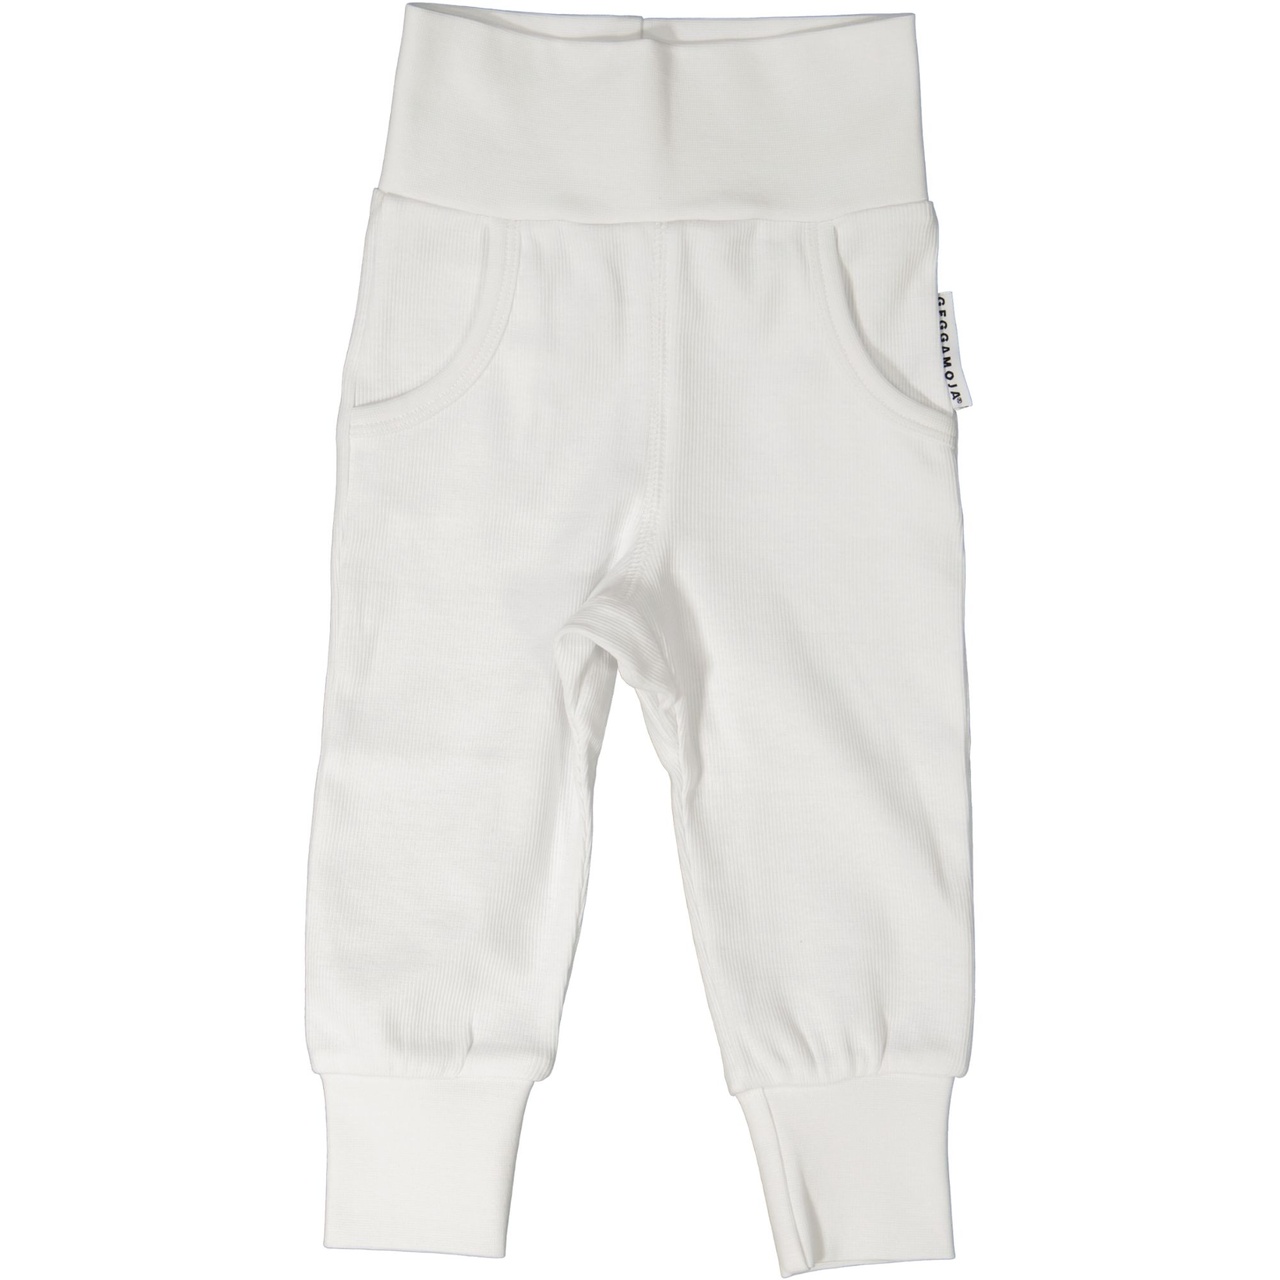 Baby trouser White  98/104